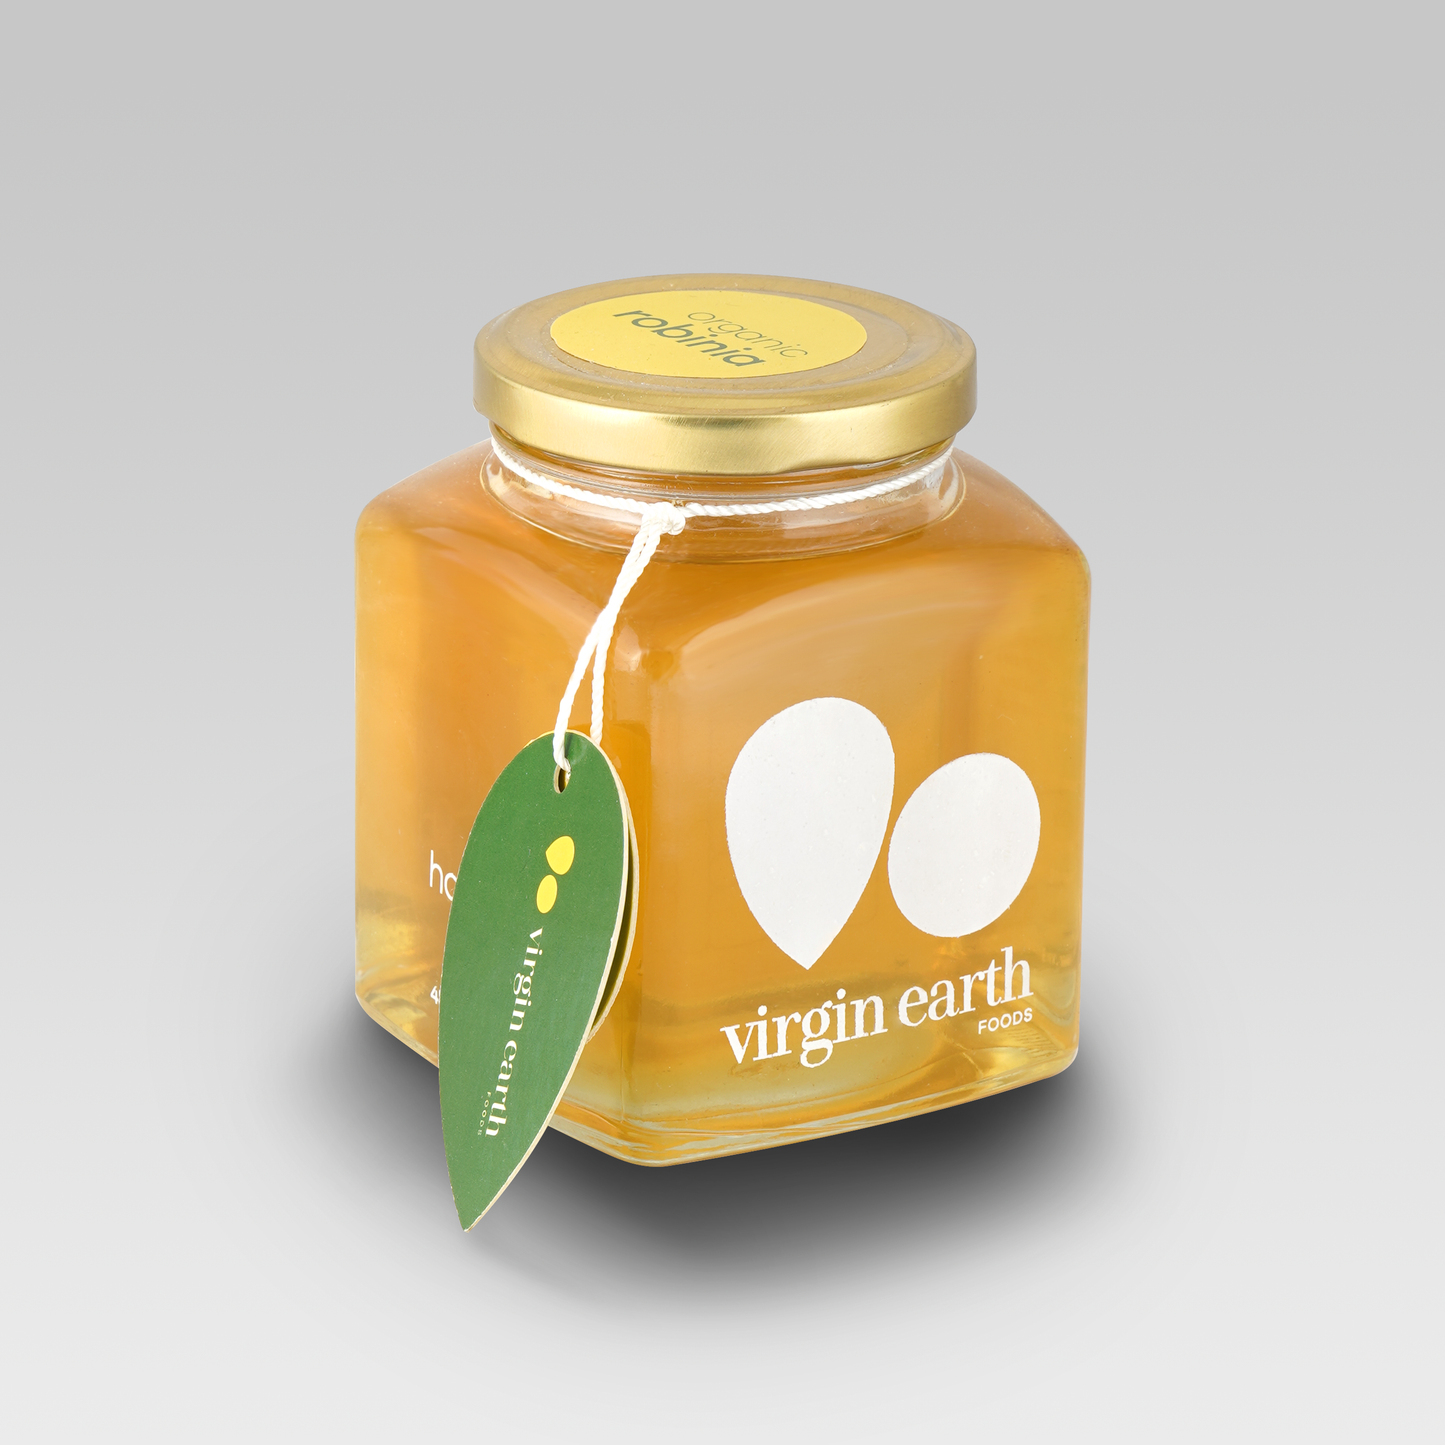 organic Robinia Honey